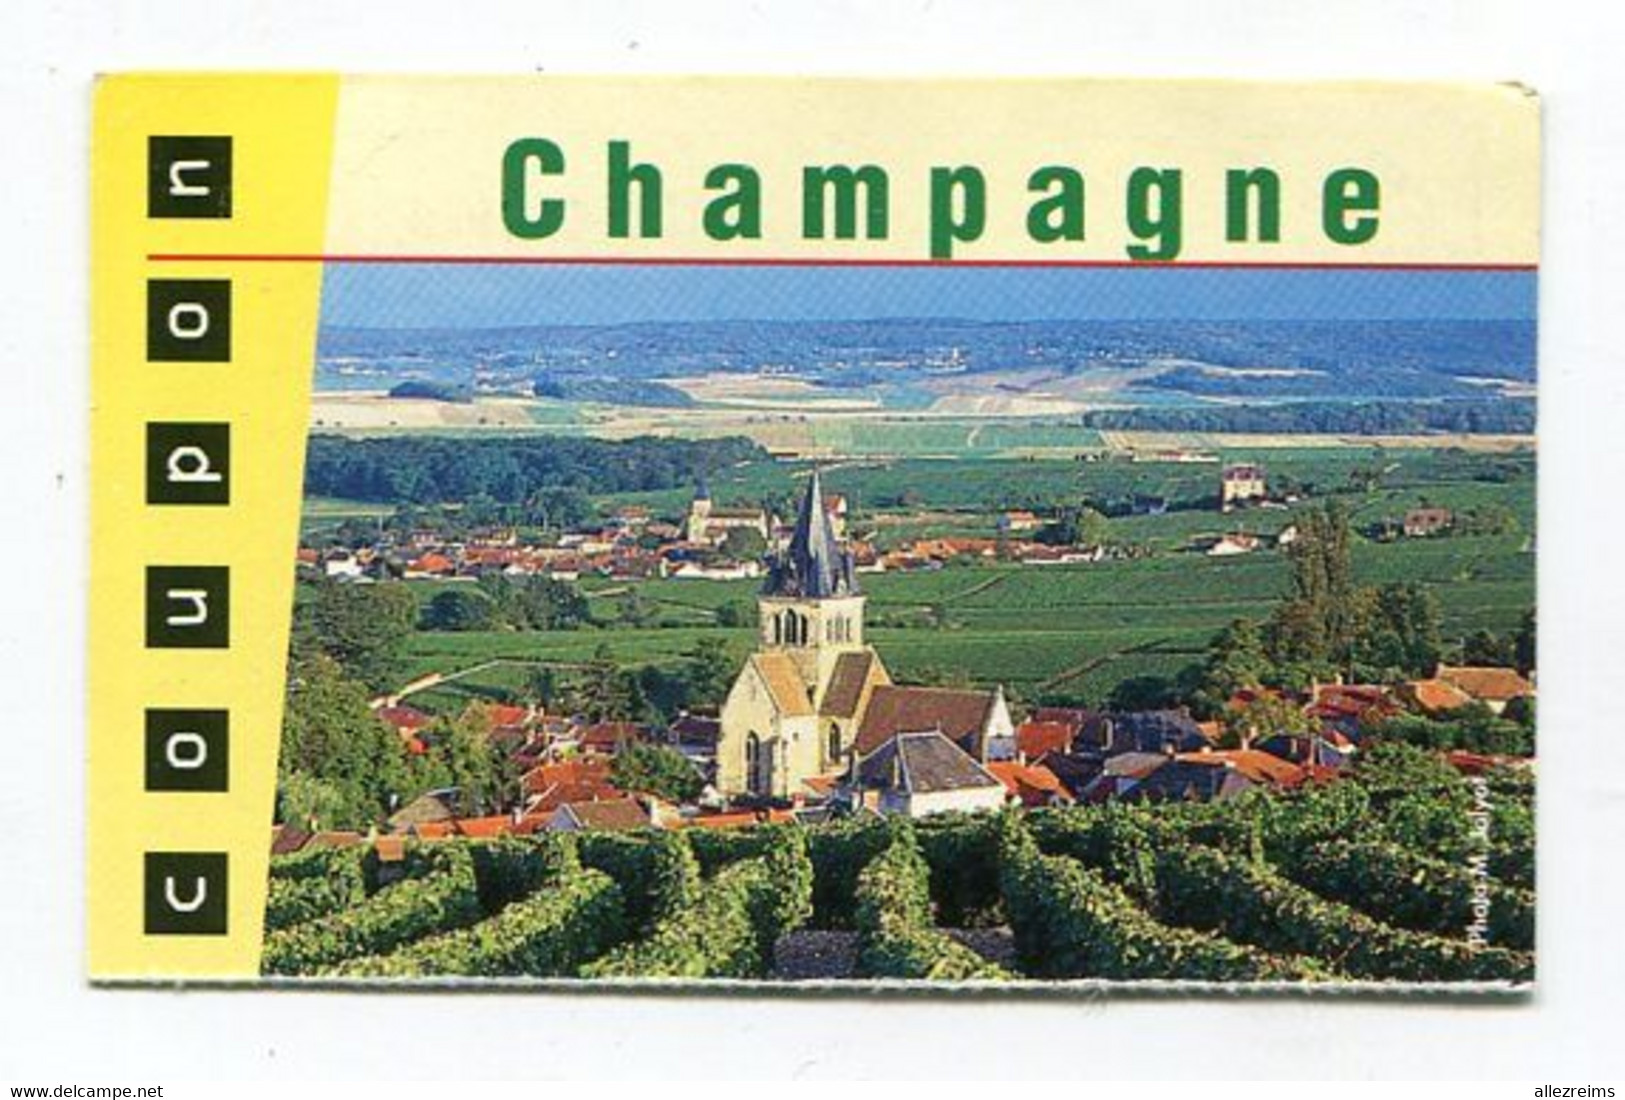 Ticket TUR Thème Champagne VILLEDOMMANGE 1999 - Europe